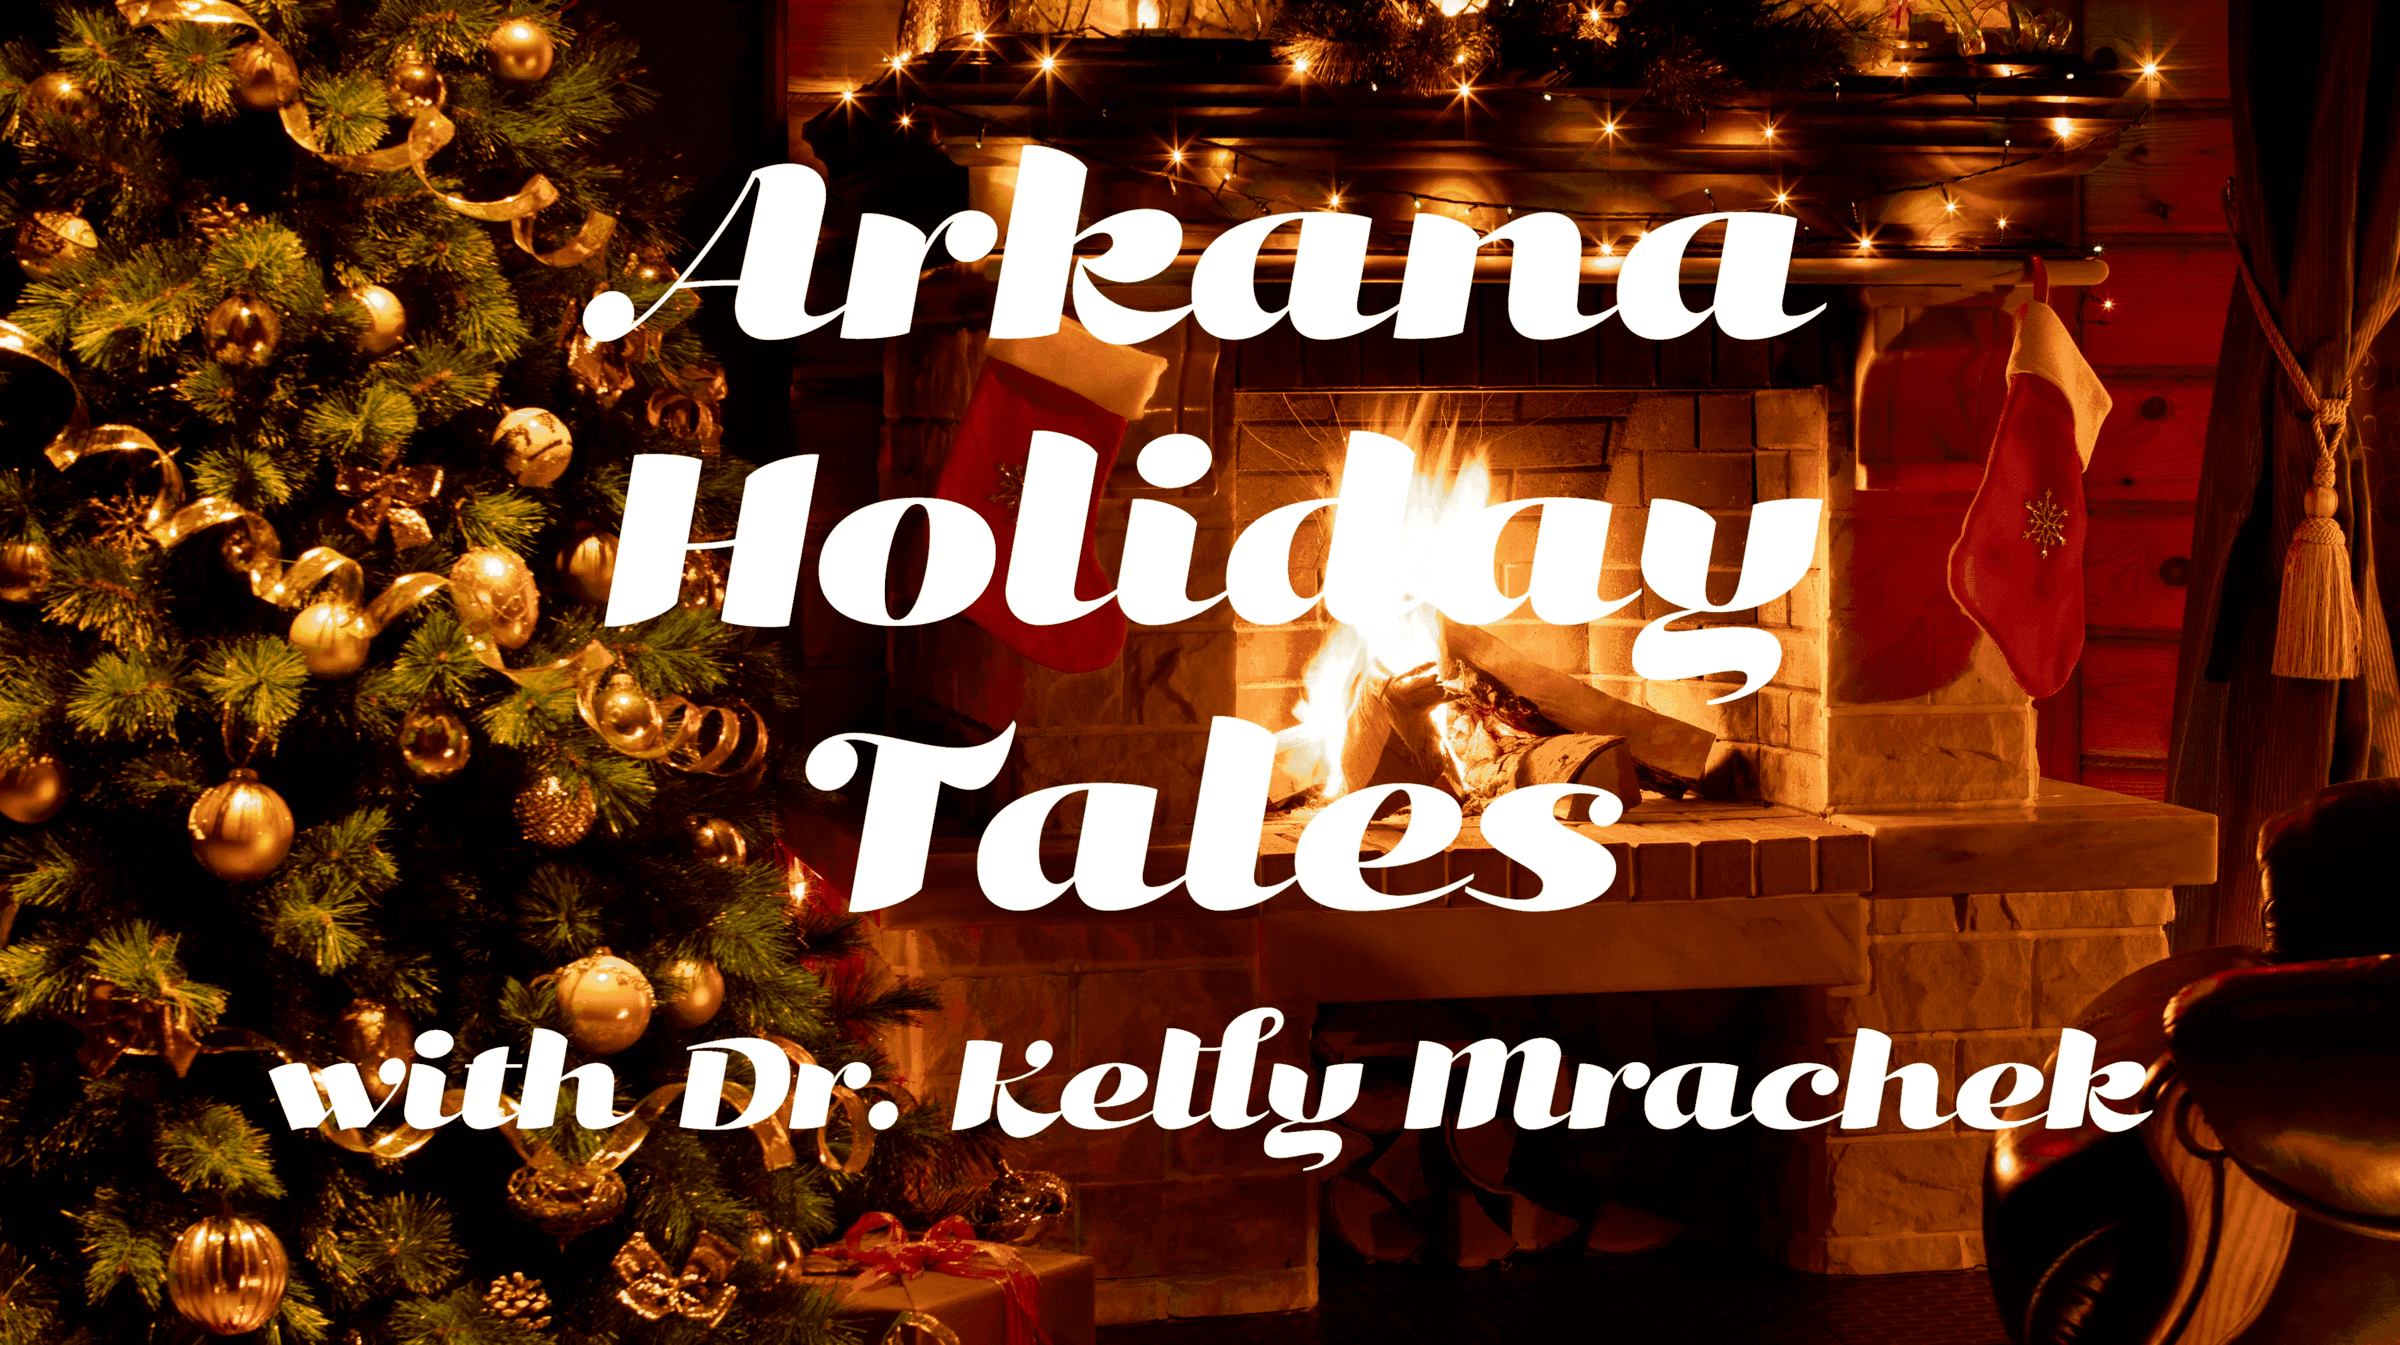 christmas, arkana holiday tales, Dr. mrachek, arkana laboratories